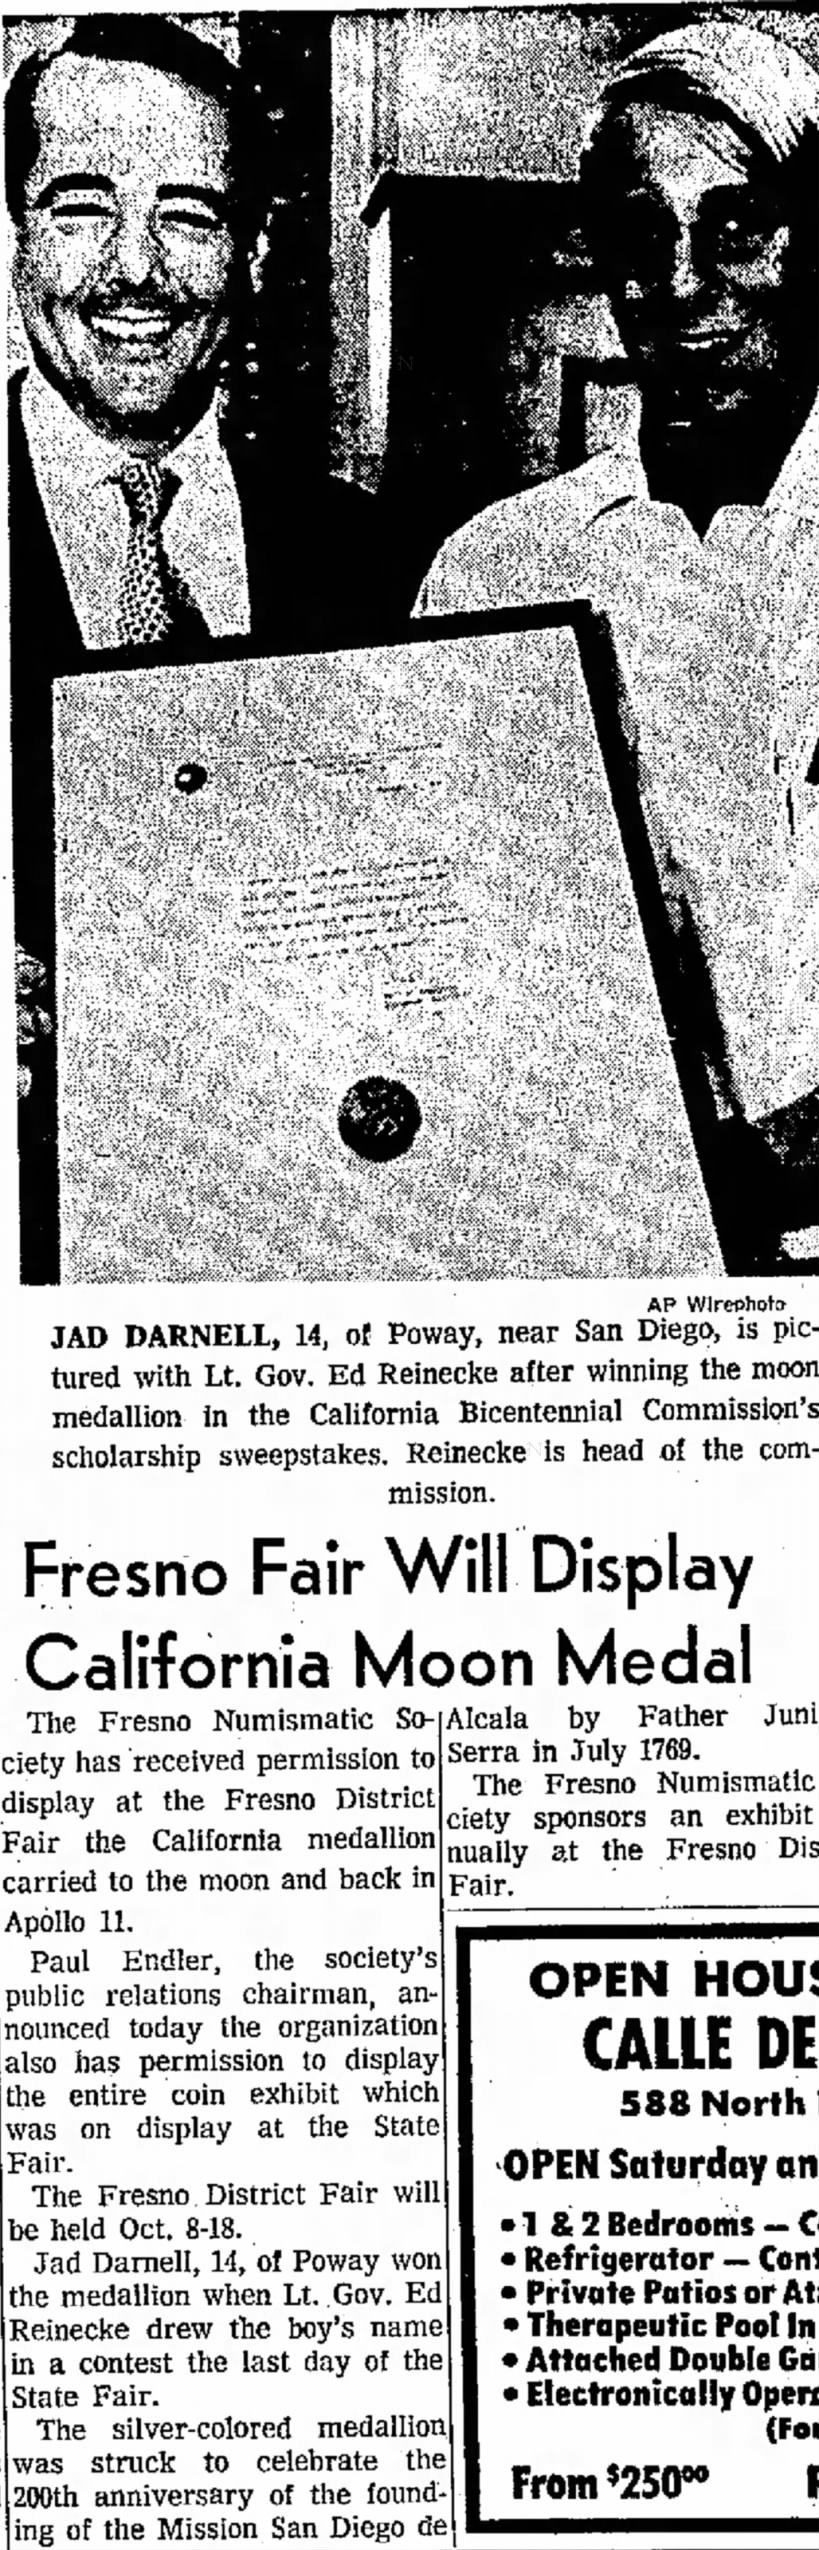 Jad Darnell Apollo 11 Cal Silver Bear 
Bicentennial Coin